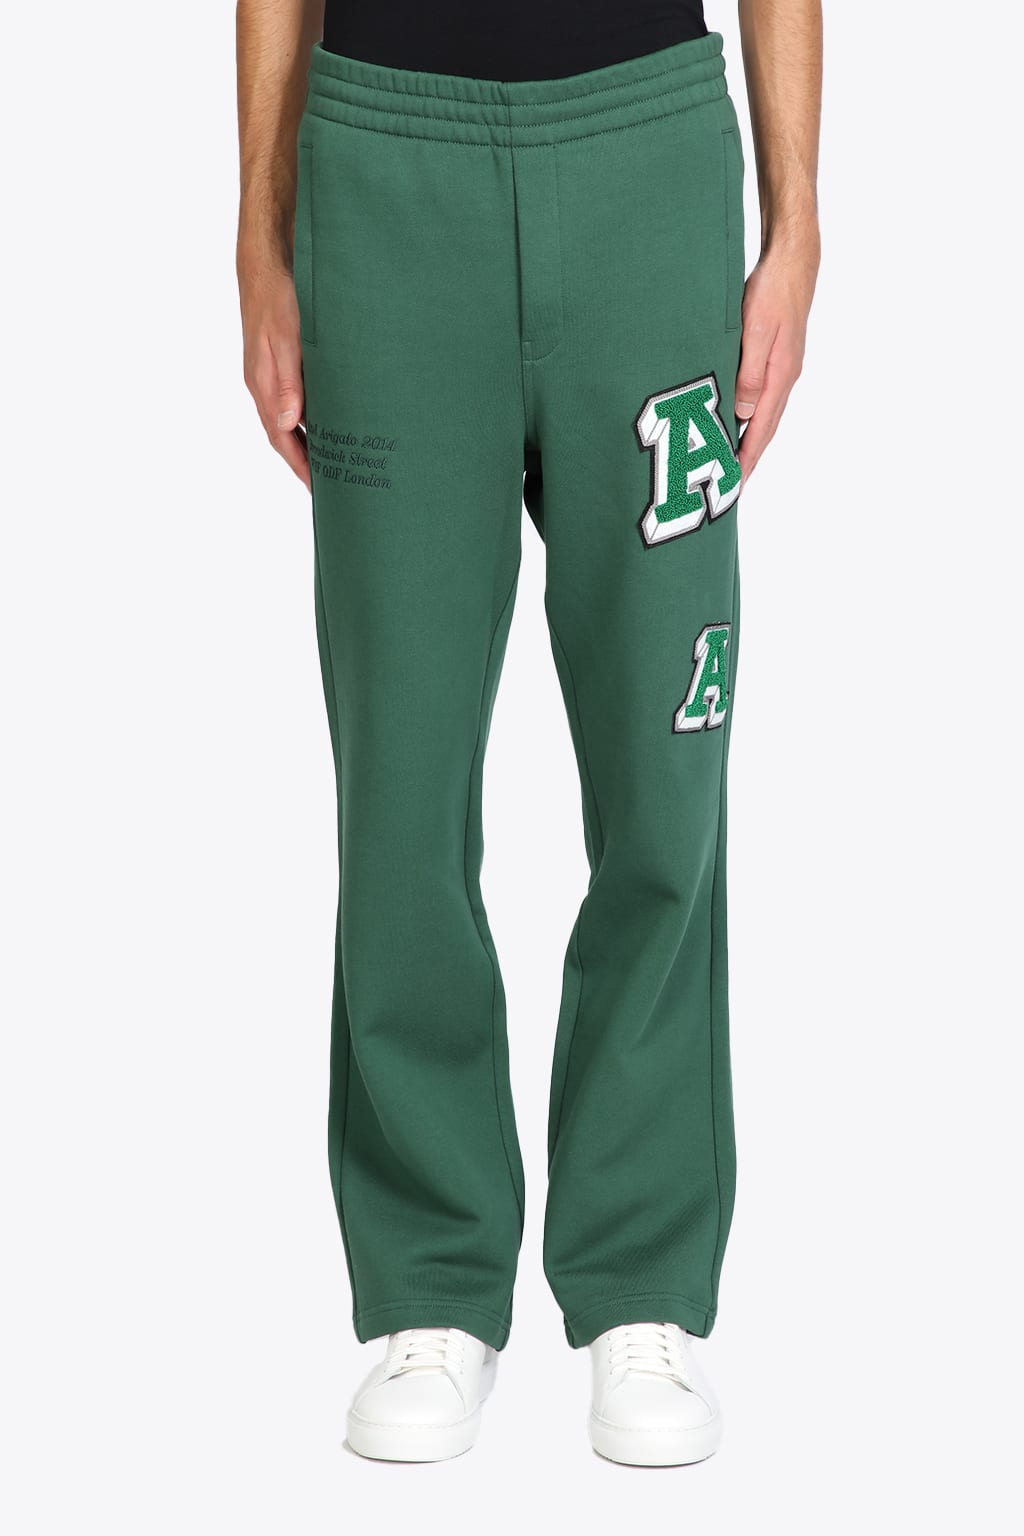 Axel Arigato Illusion Sweatpants Green cotton sweatpants with monogram patches - Illusion sweatpants